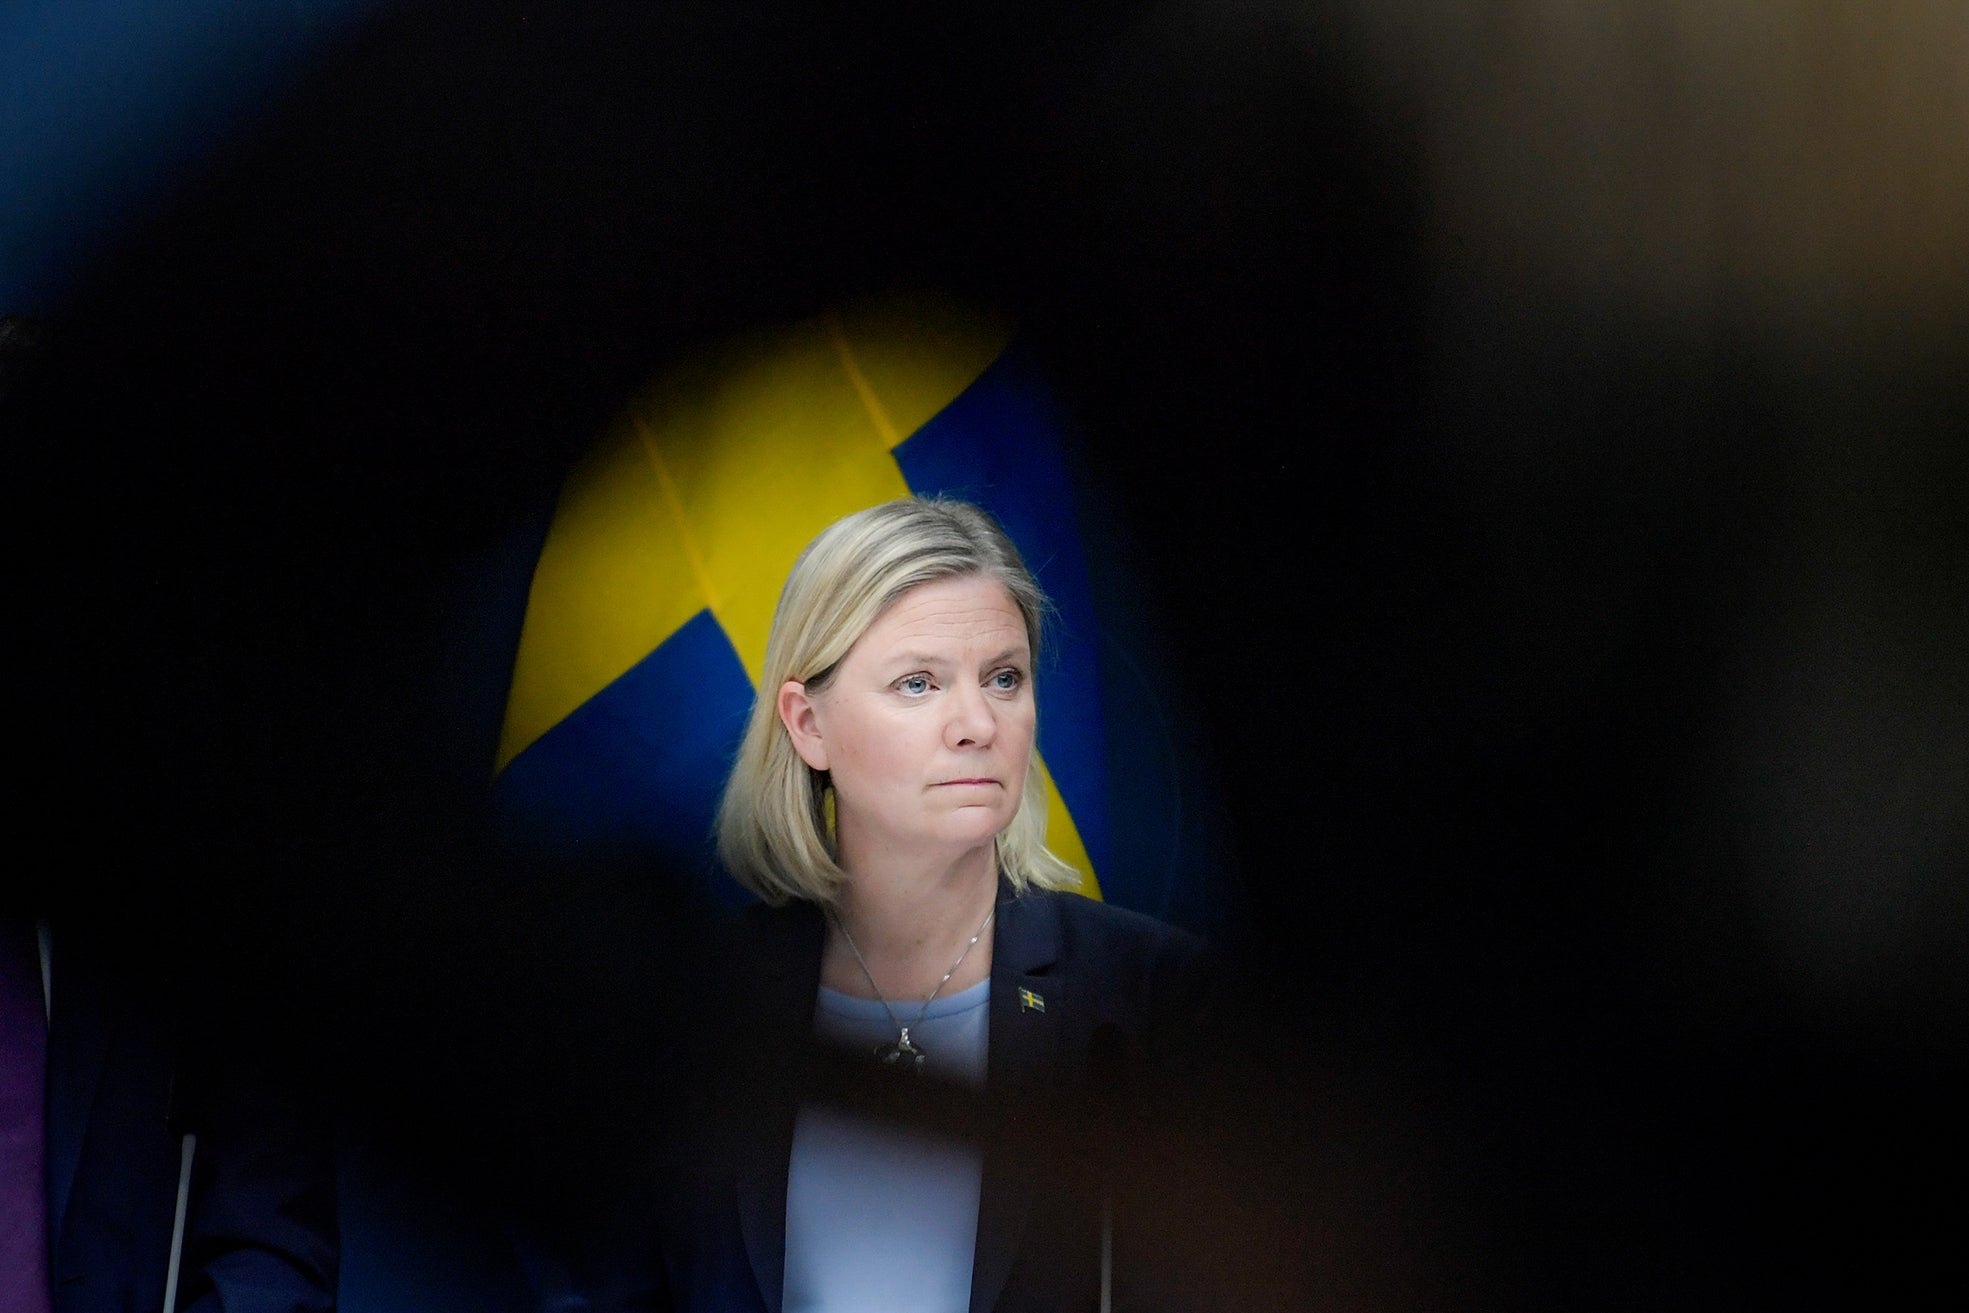 The biggest challenge for Sweden’s new prime minister: tackling rampant gang crime